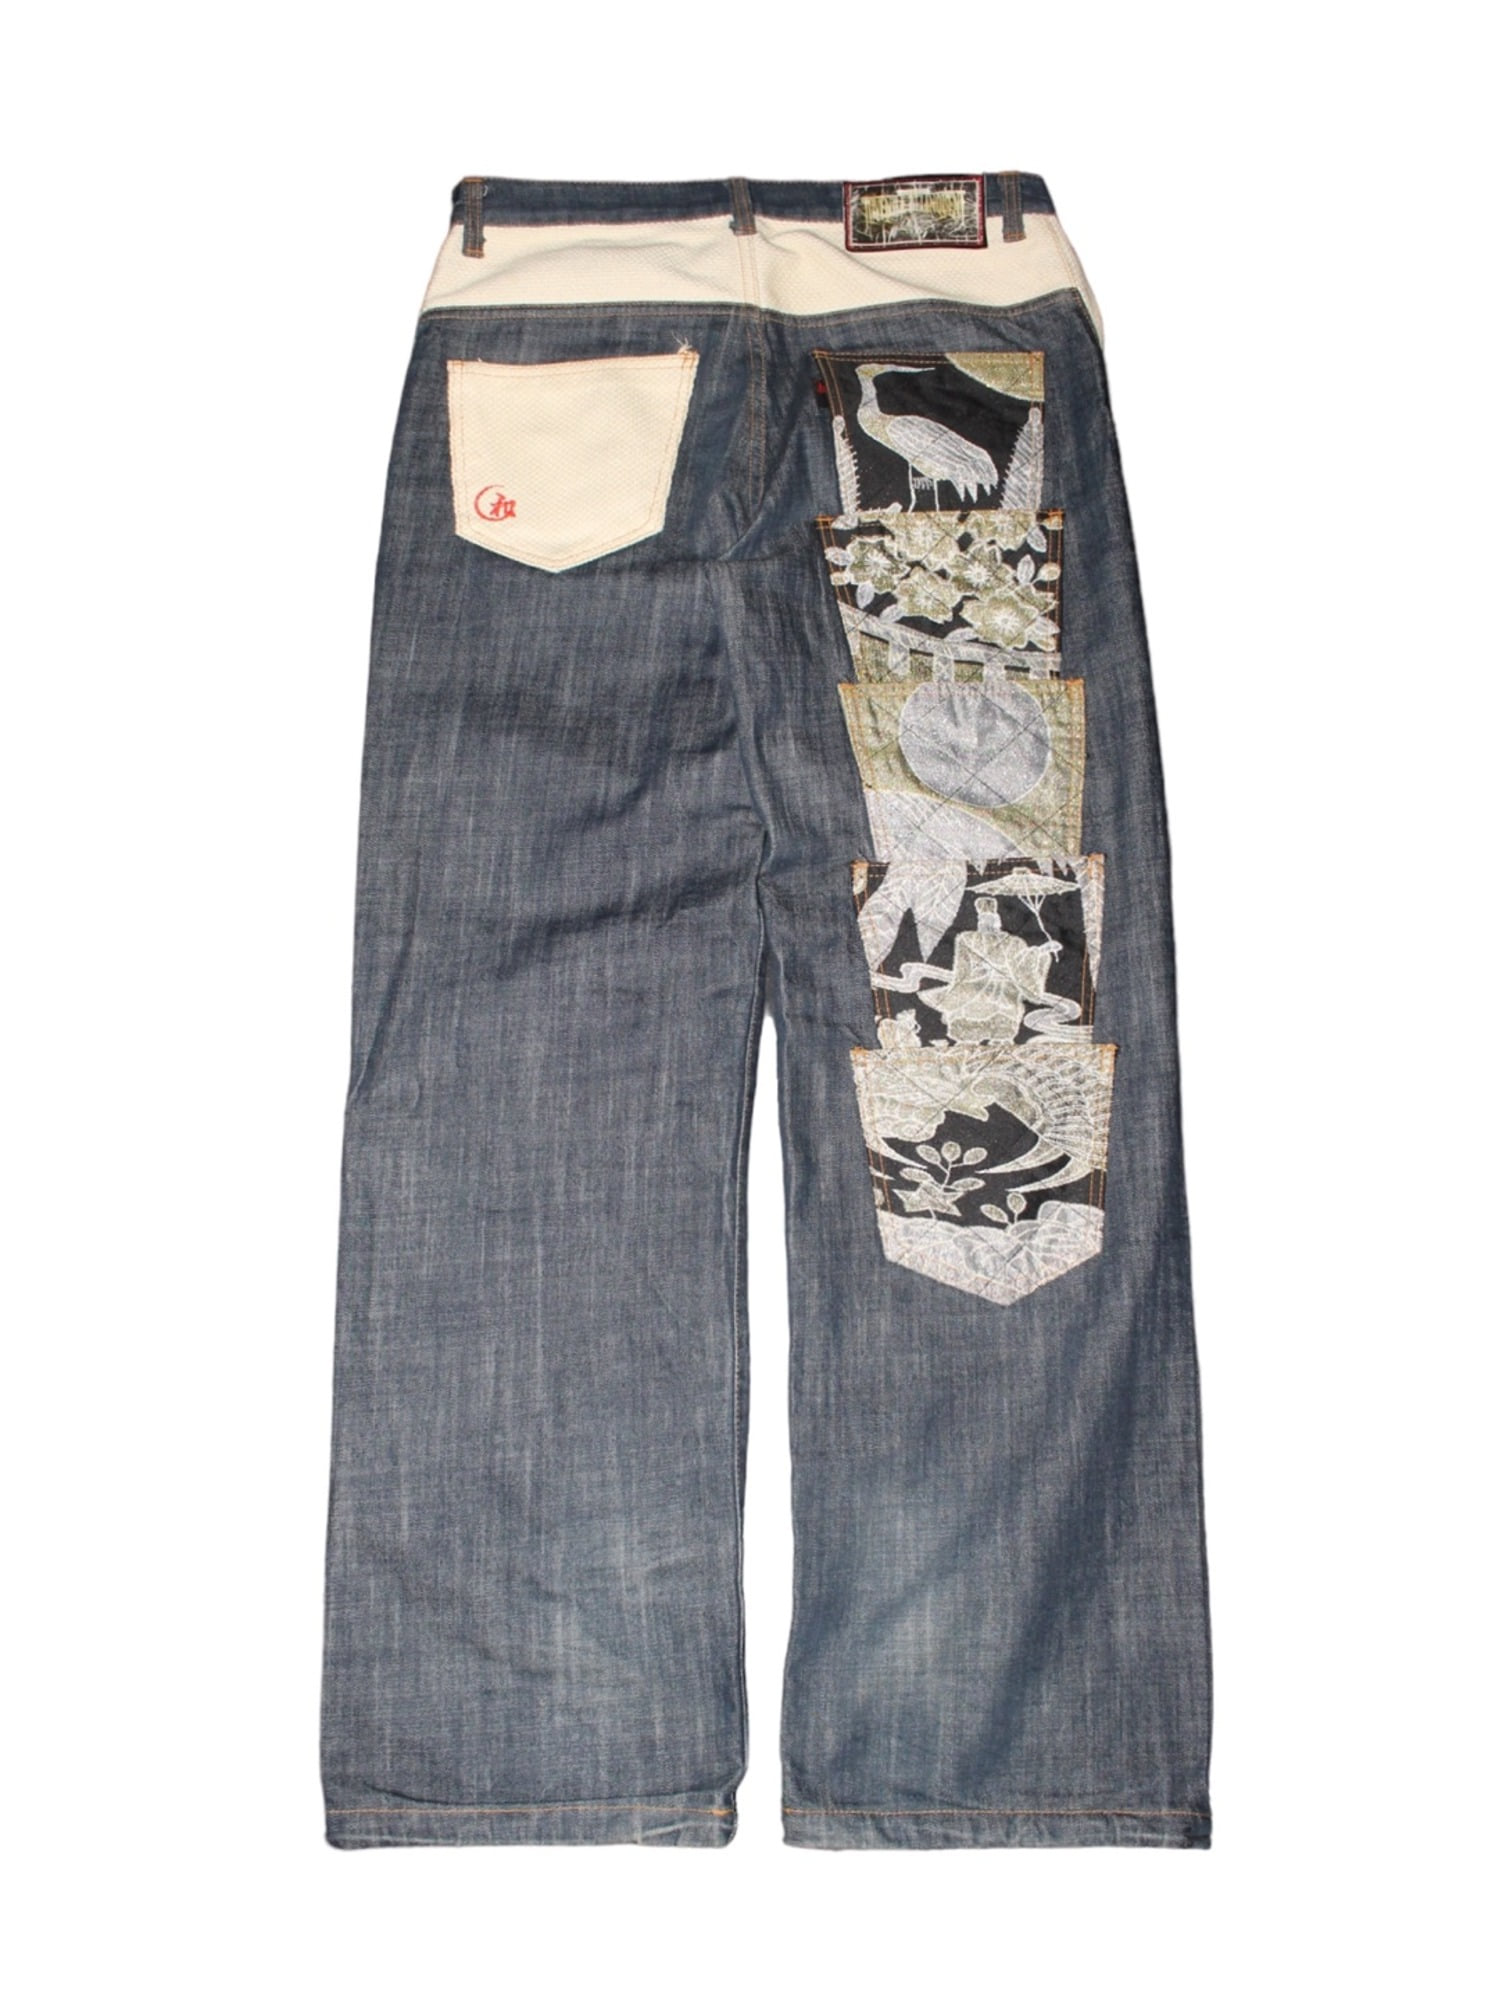 Juvenile Delinquent Oriental Multi Pocket String Wide Denim Pants